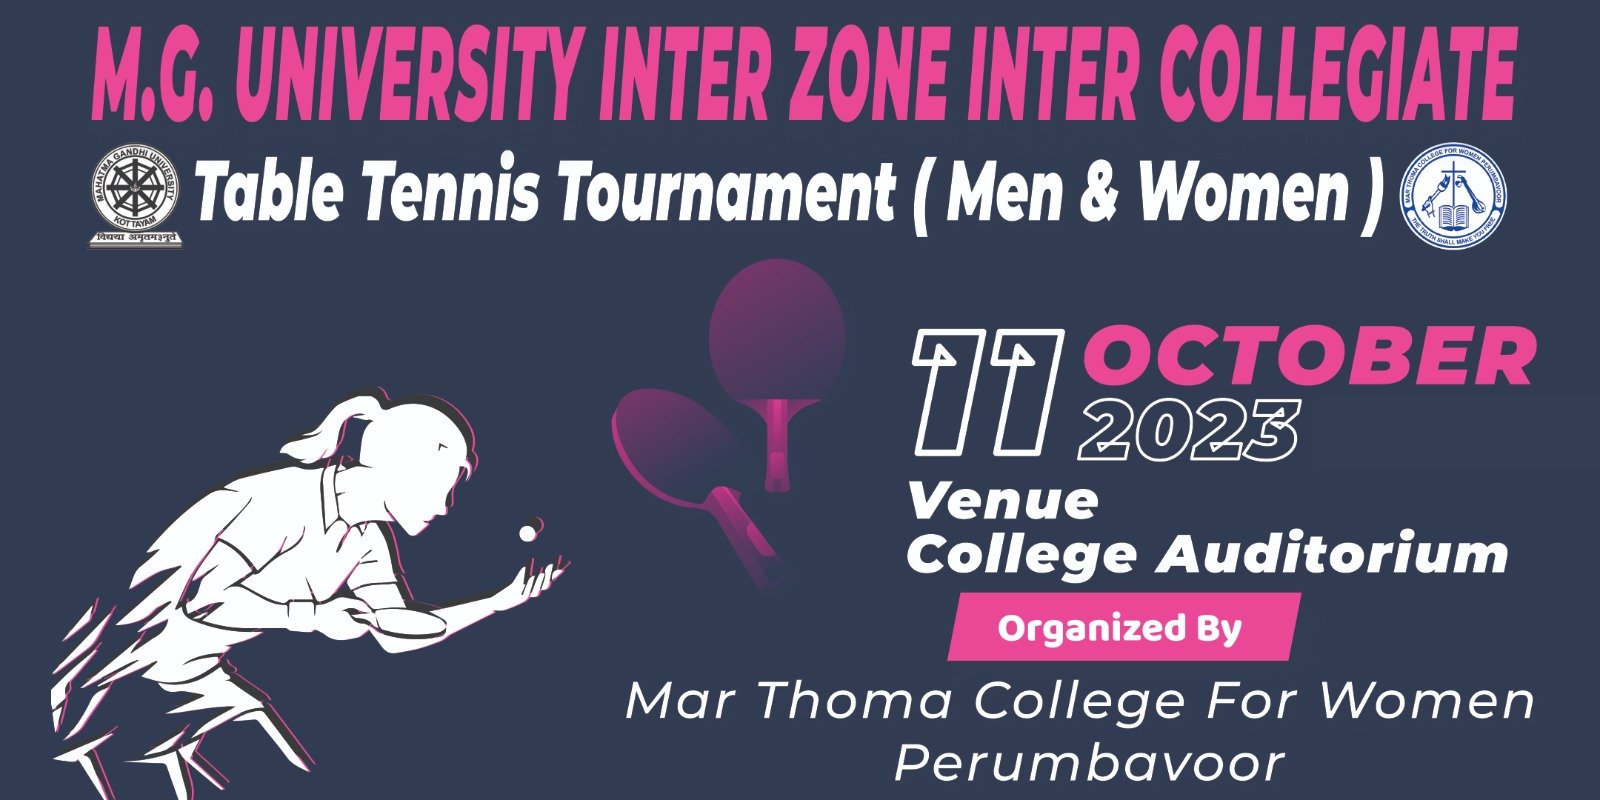 MG University Inter Zone Inter Collegiate Table Tennis Tournament (Men & Women)